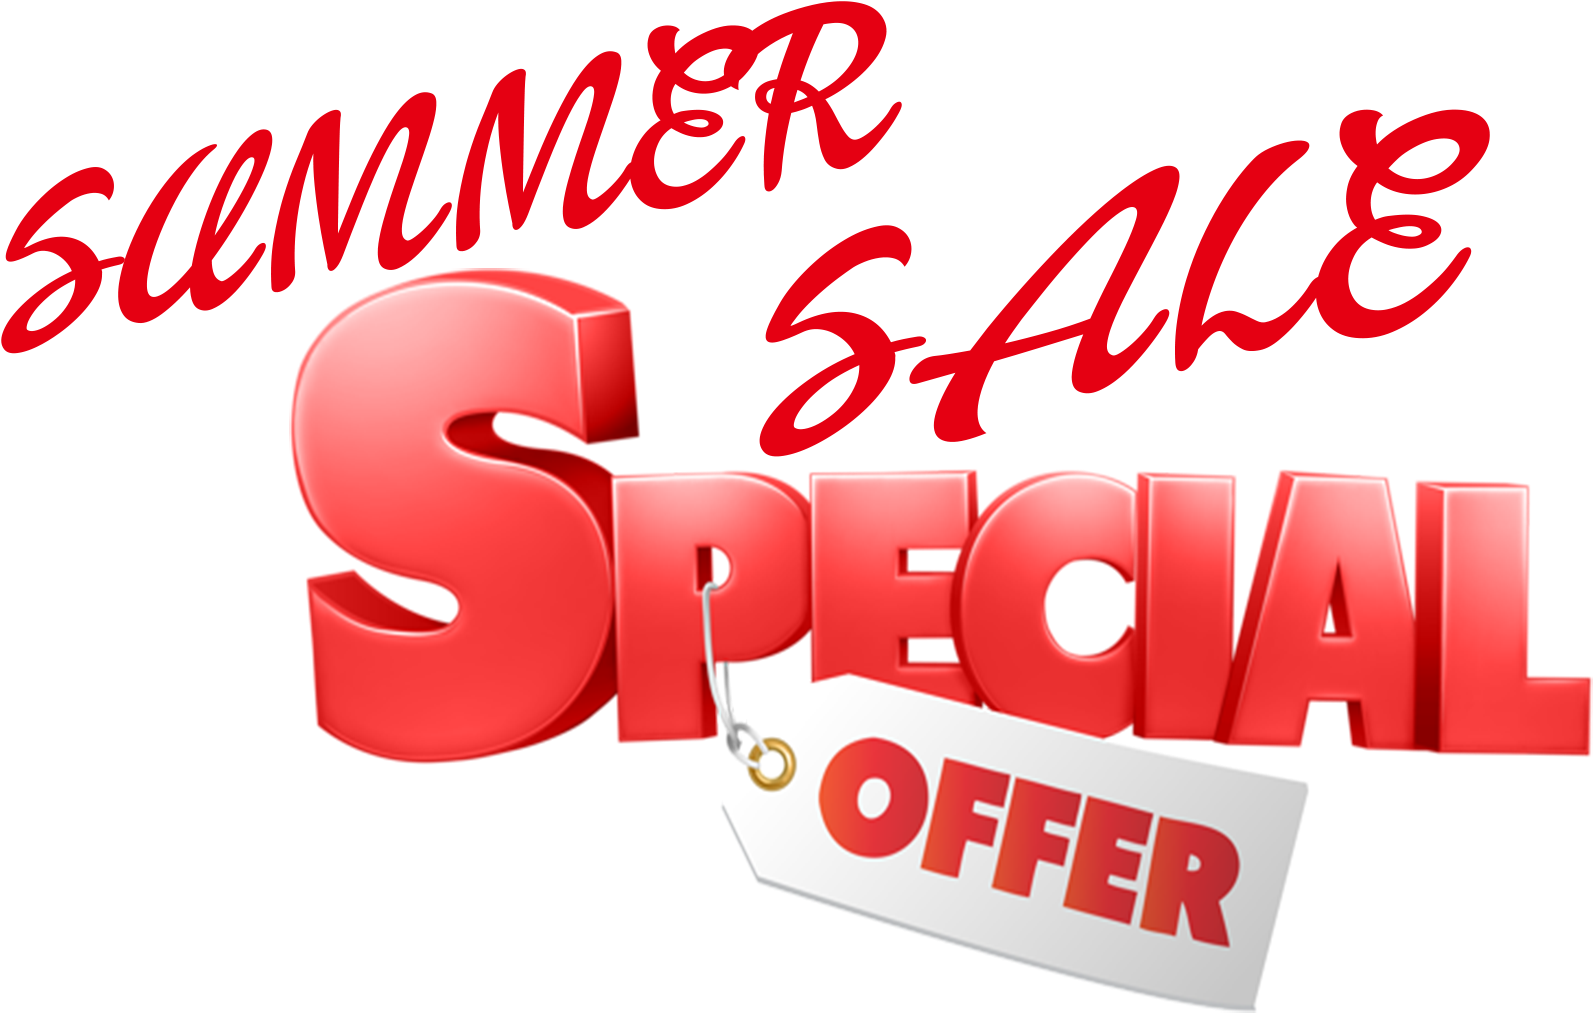 Summer Sale Special Offer3 D Text